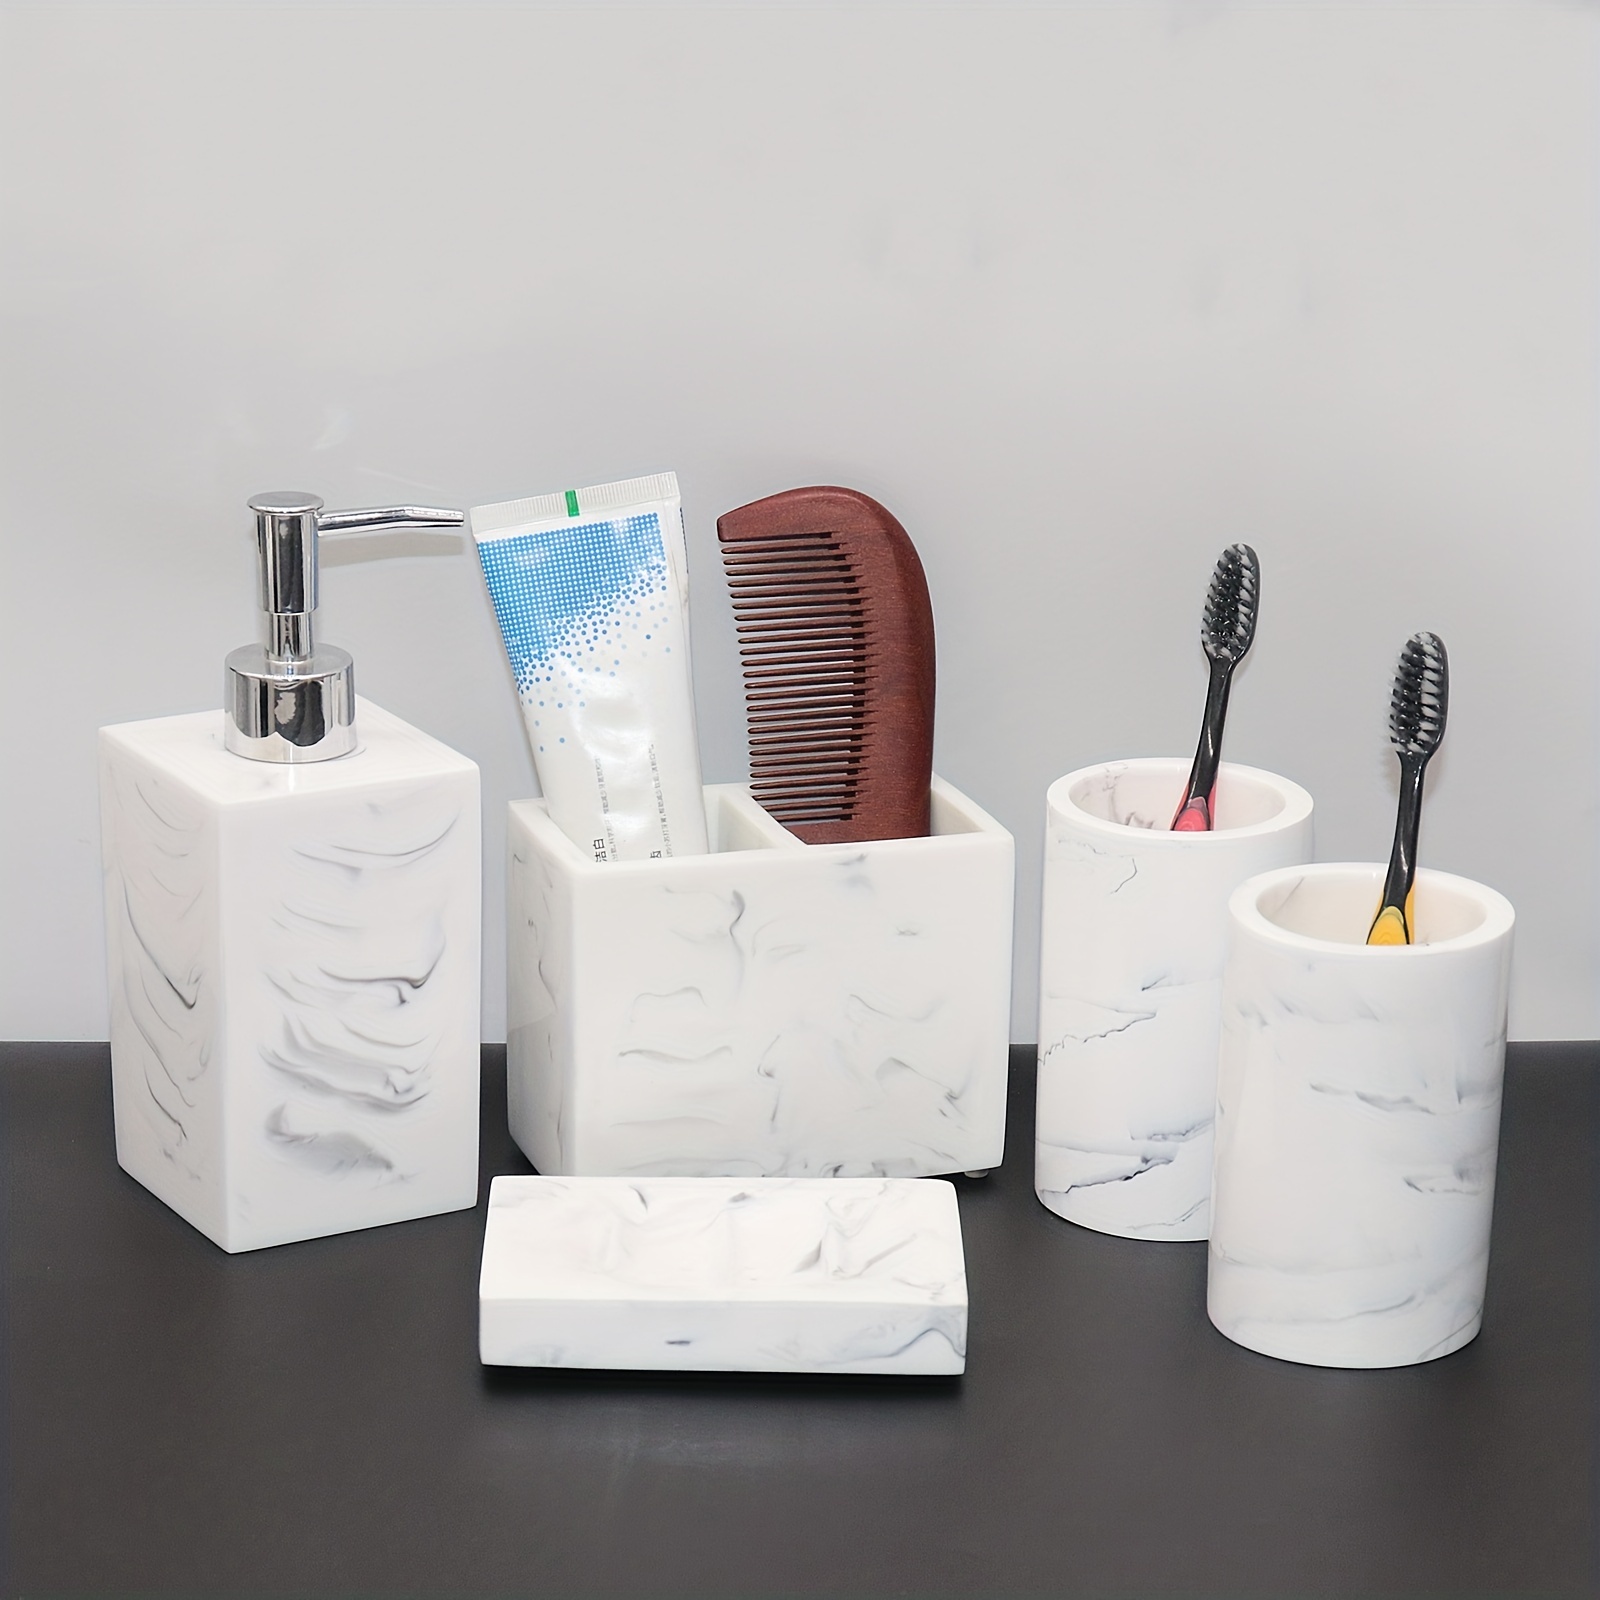 Marble Pattern Bathroom Toiletries Set, Mouthwash Cup, Soap Dish